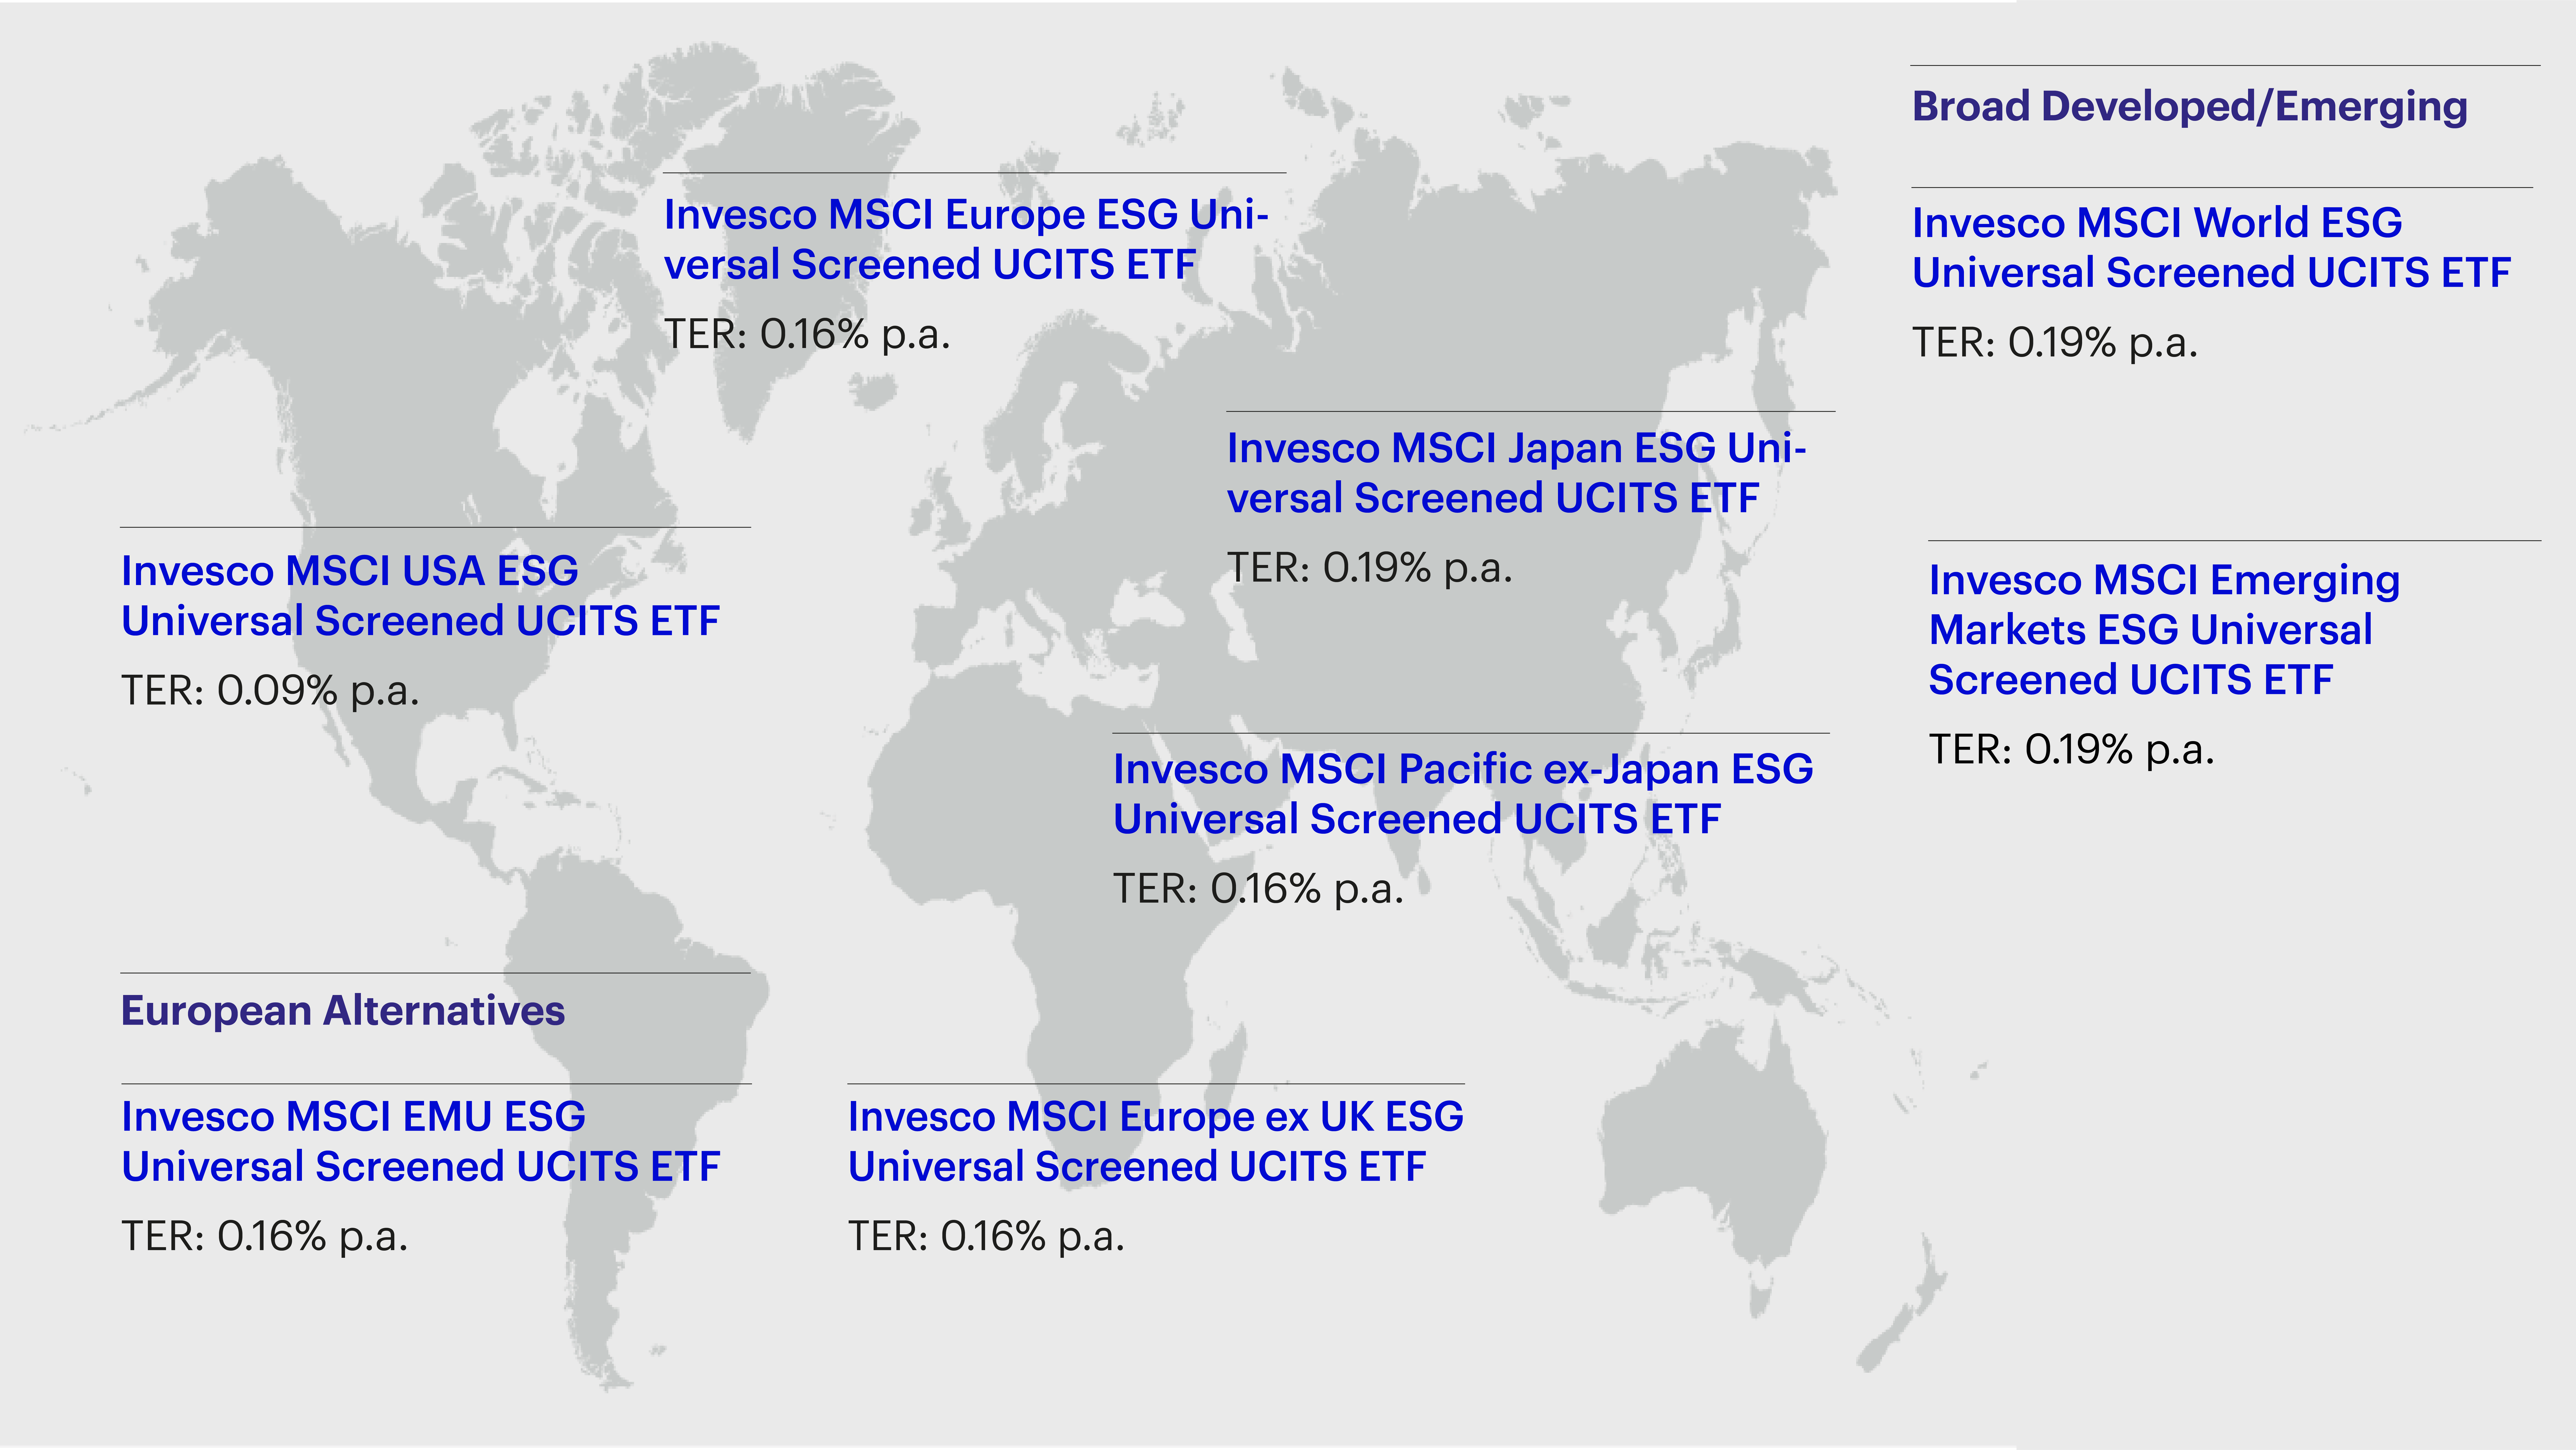 Helping you integrate ESG across your global portfolio